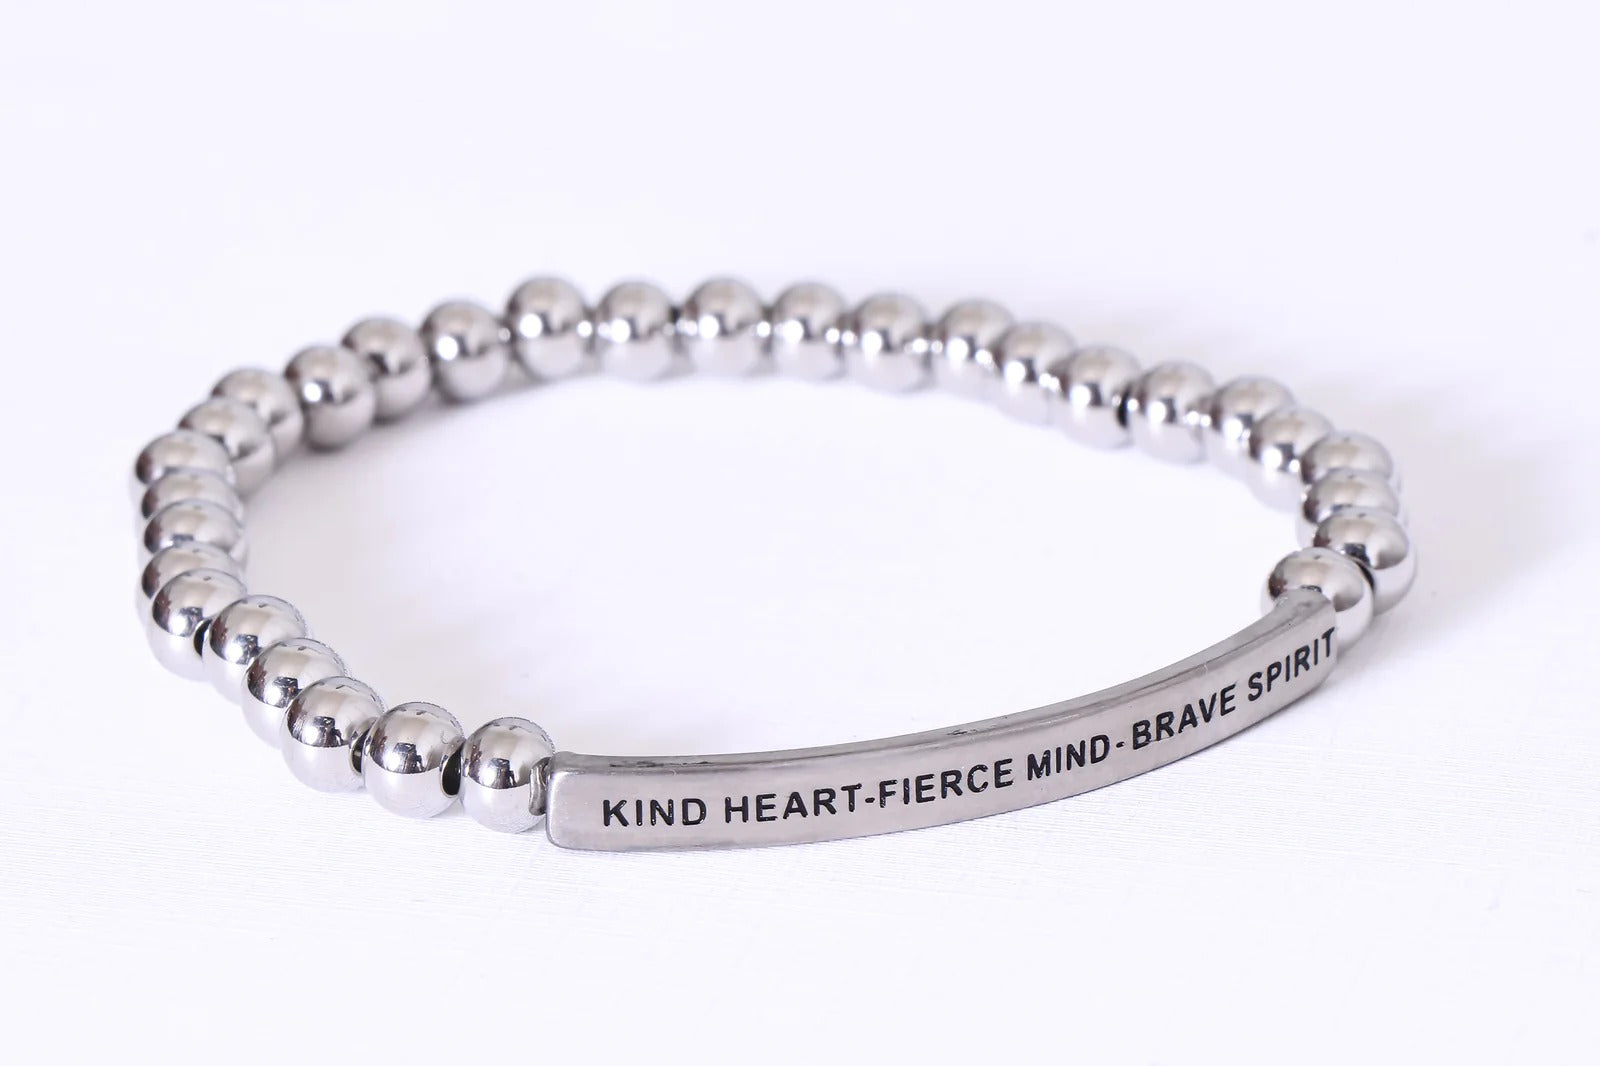 Kind Heart Fierce Mind Brave Spirit Silver Bracelet 6mm